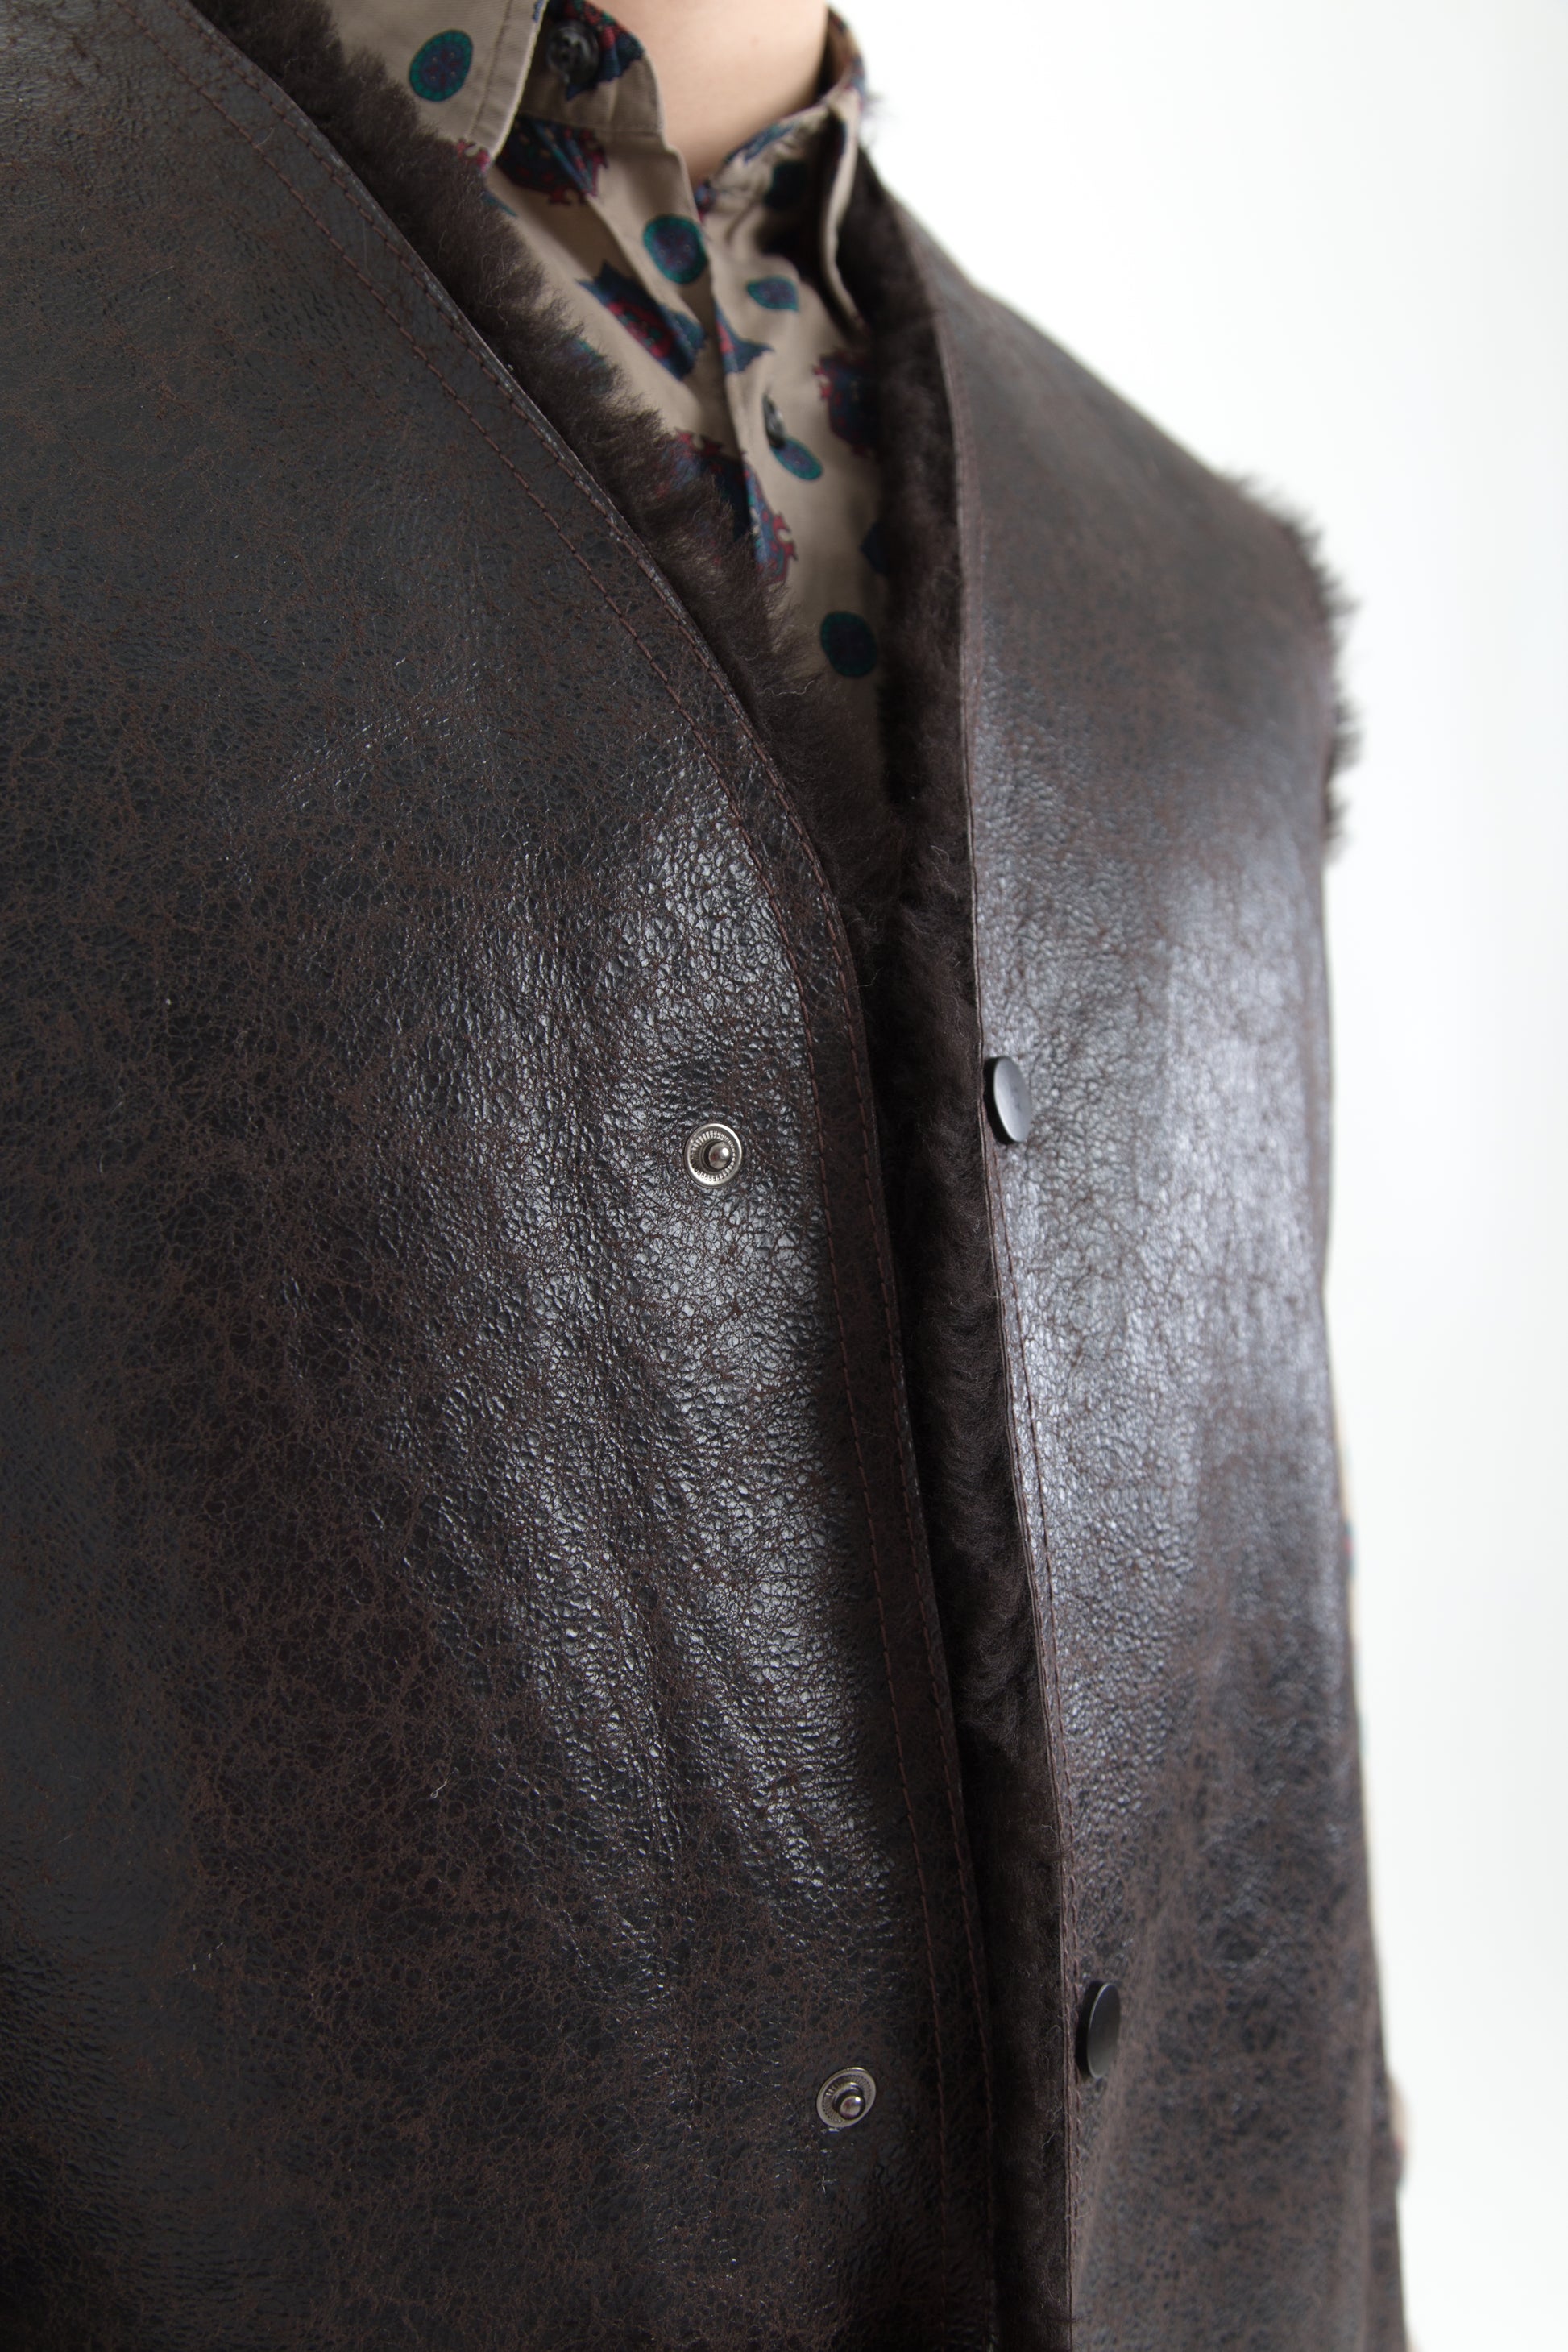 Cowboy Men's Dark Brown Thin Sheepskin Vest with Fur Lining and Front Button Closure